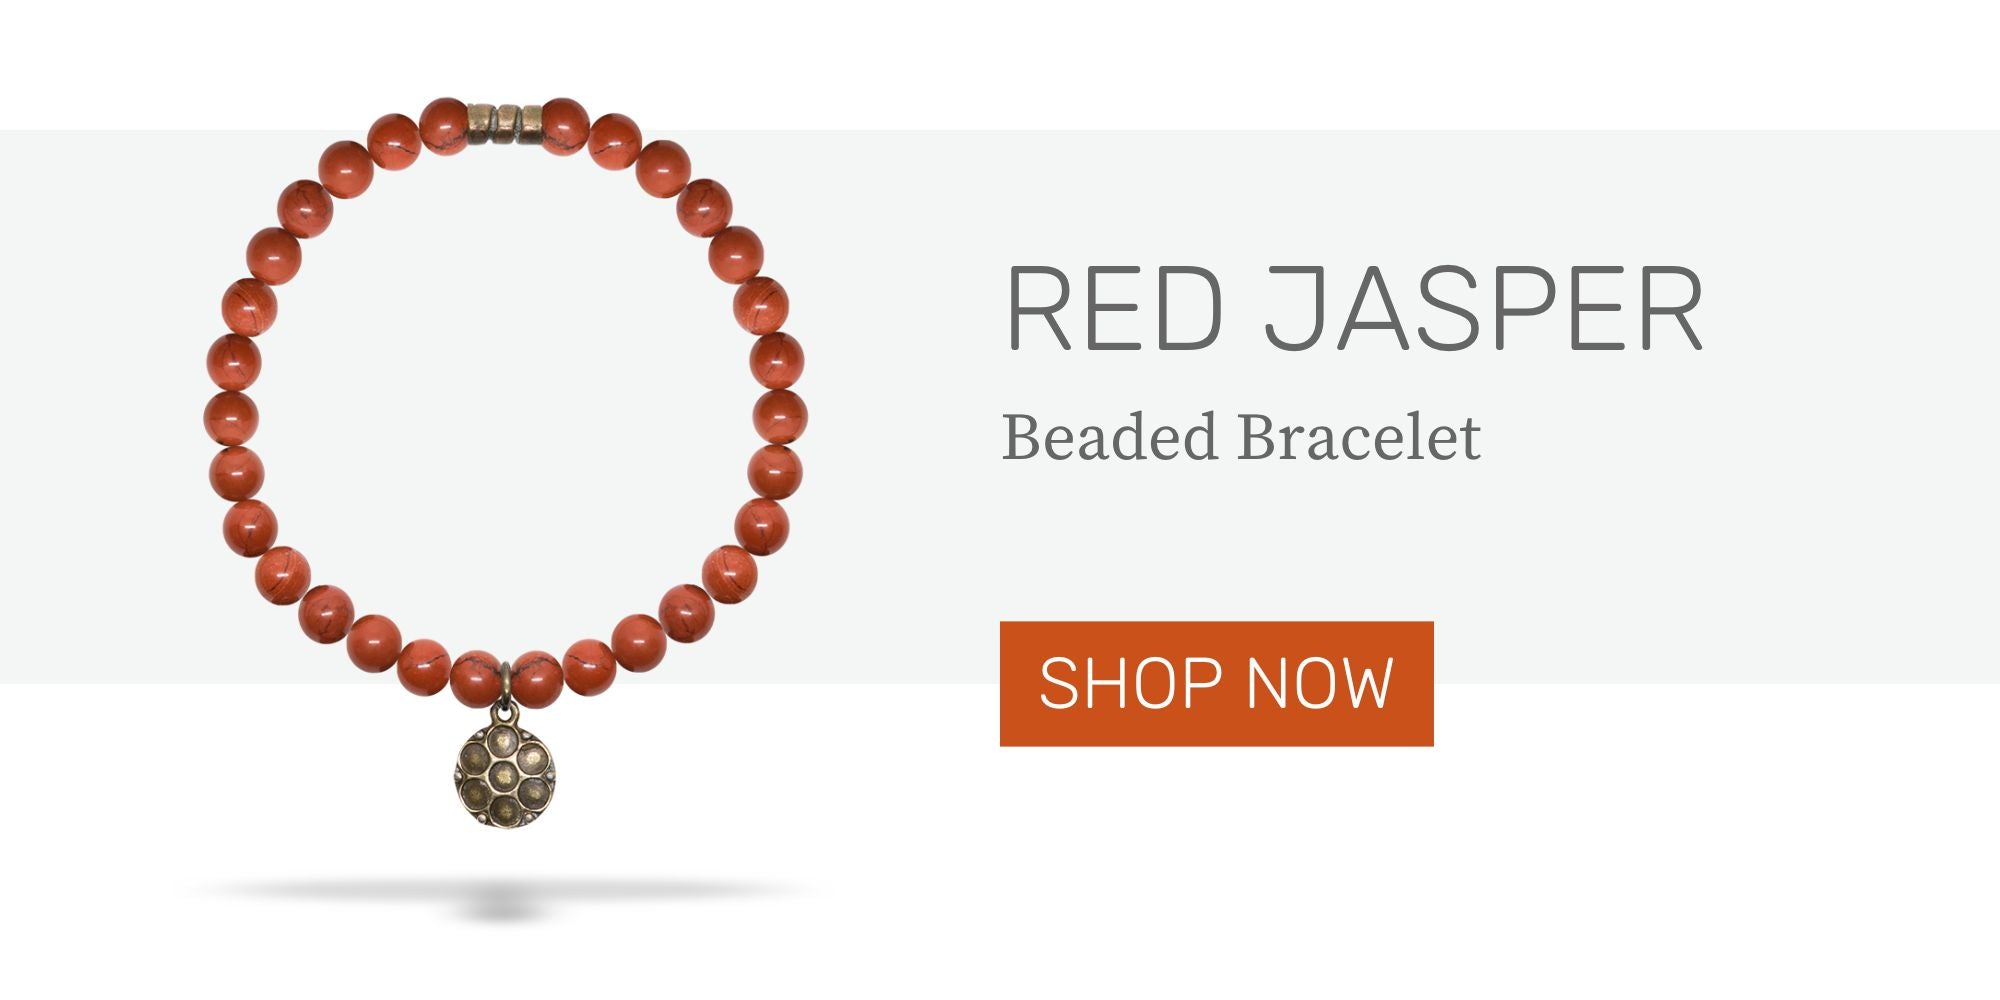 Red Jasper beaded bracelet by Wild In Africa